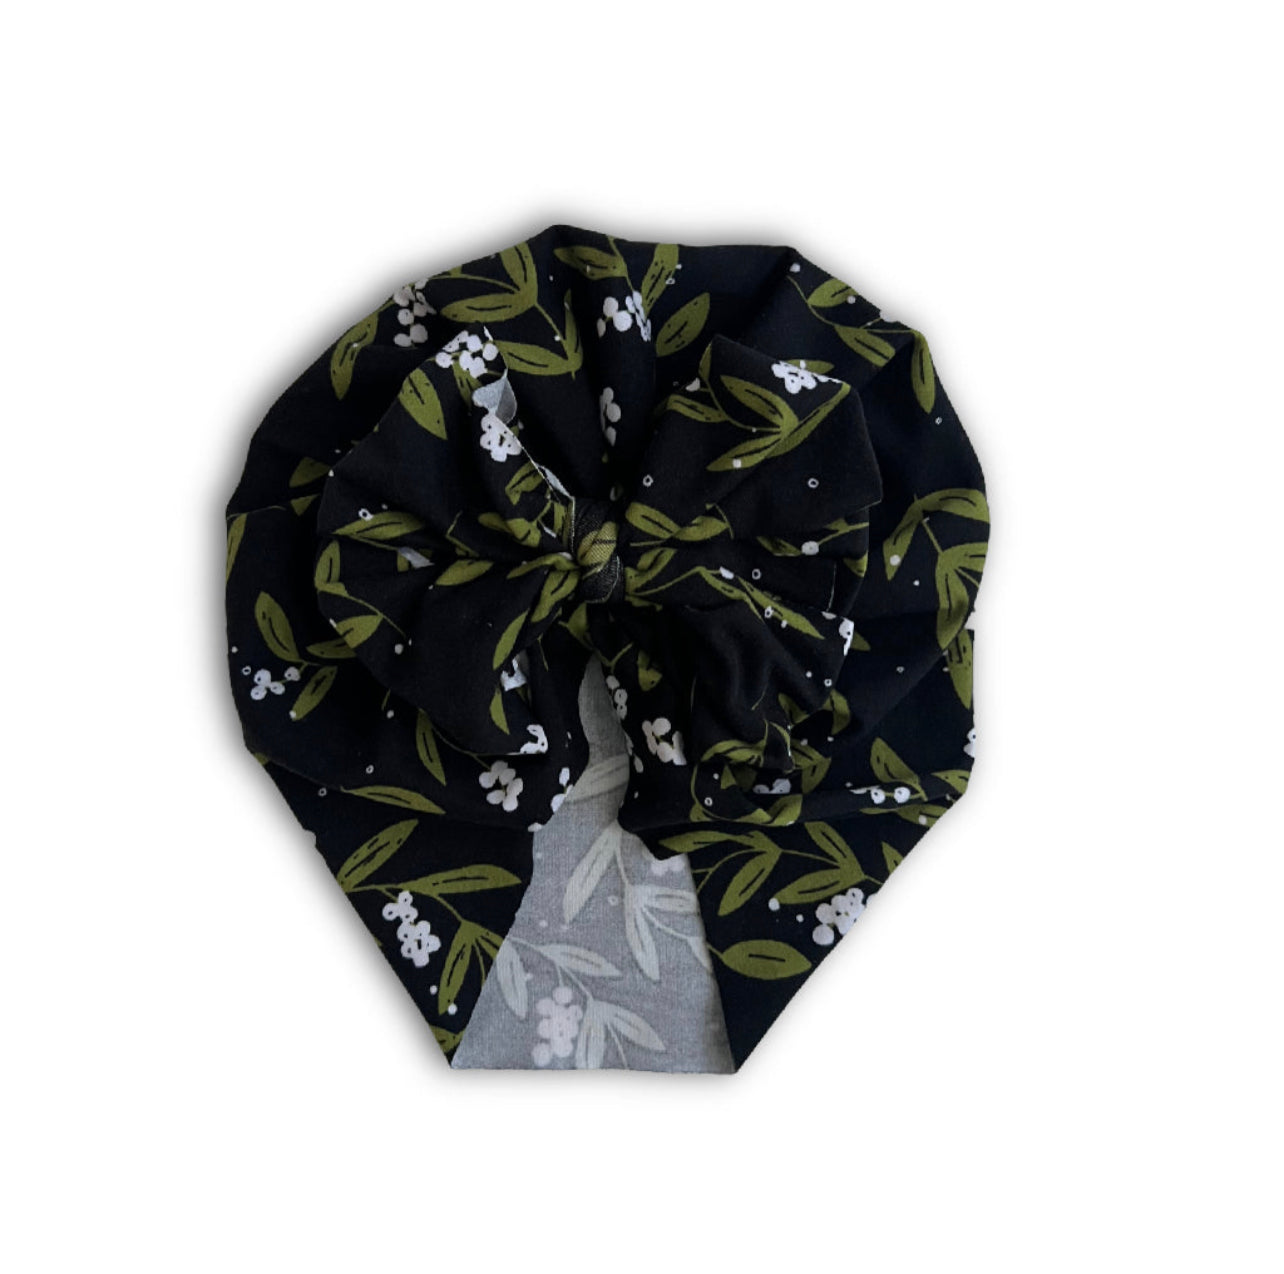 Sale! “Black & Berry” Messy Bow Headwrap/Turban